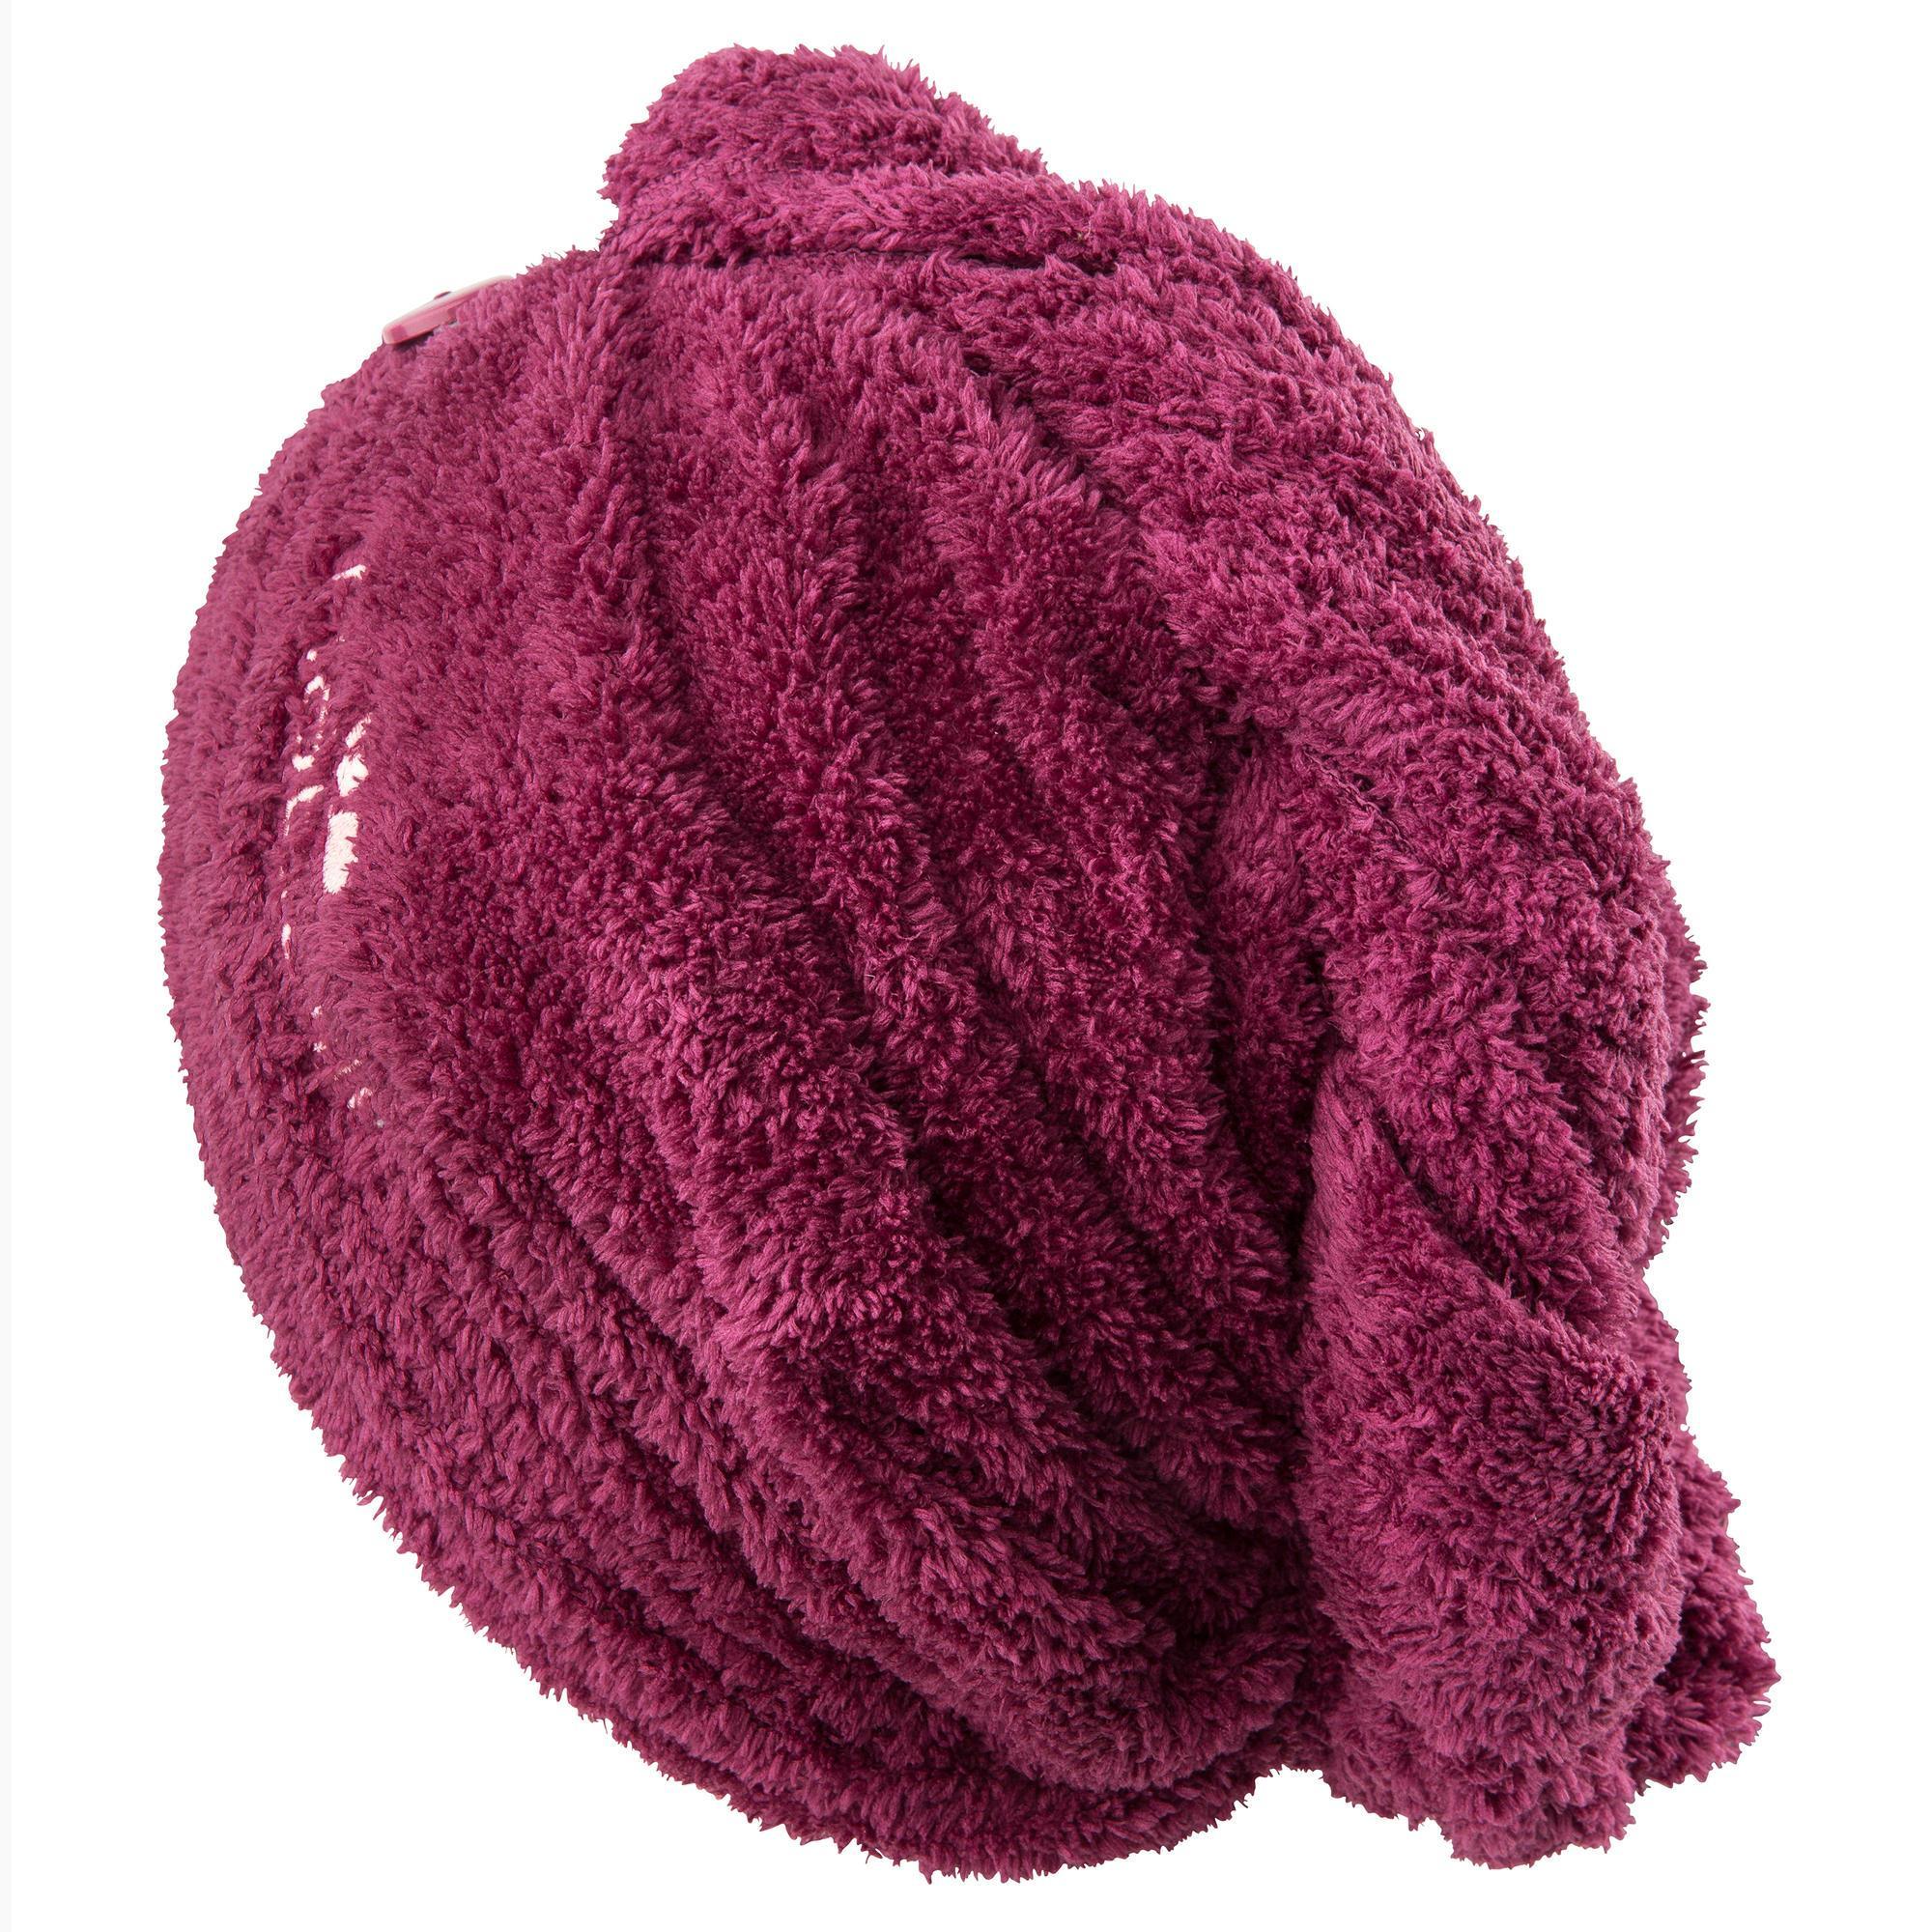 decathlon head towel